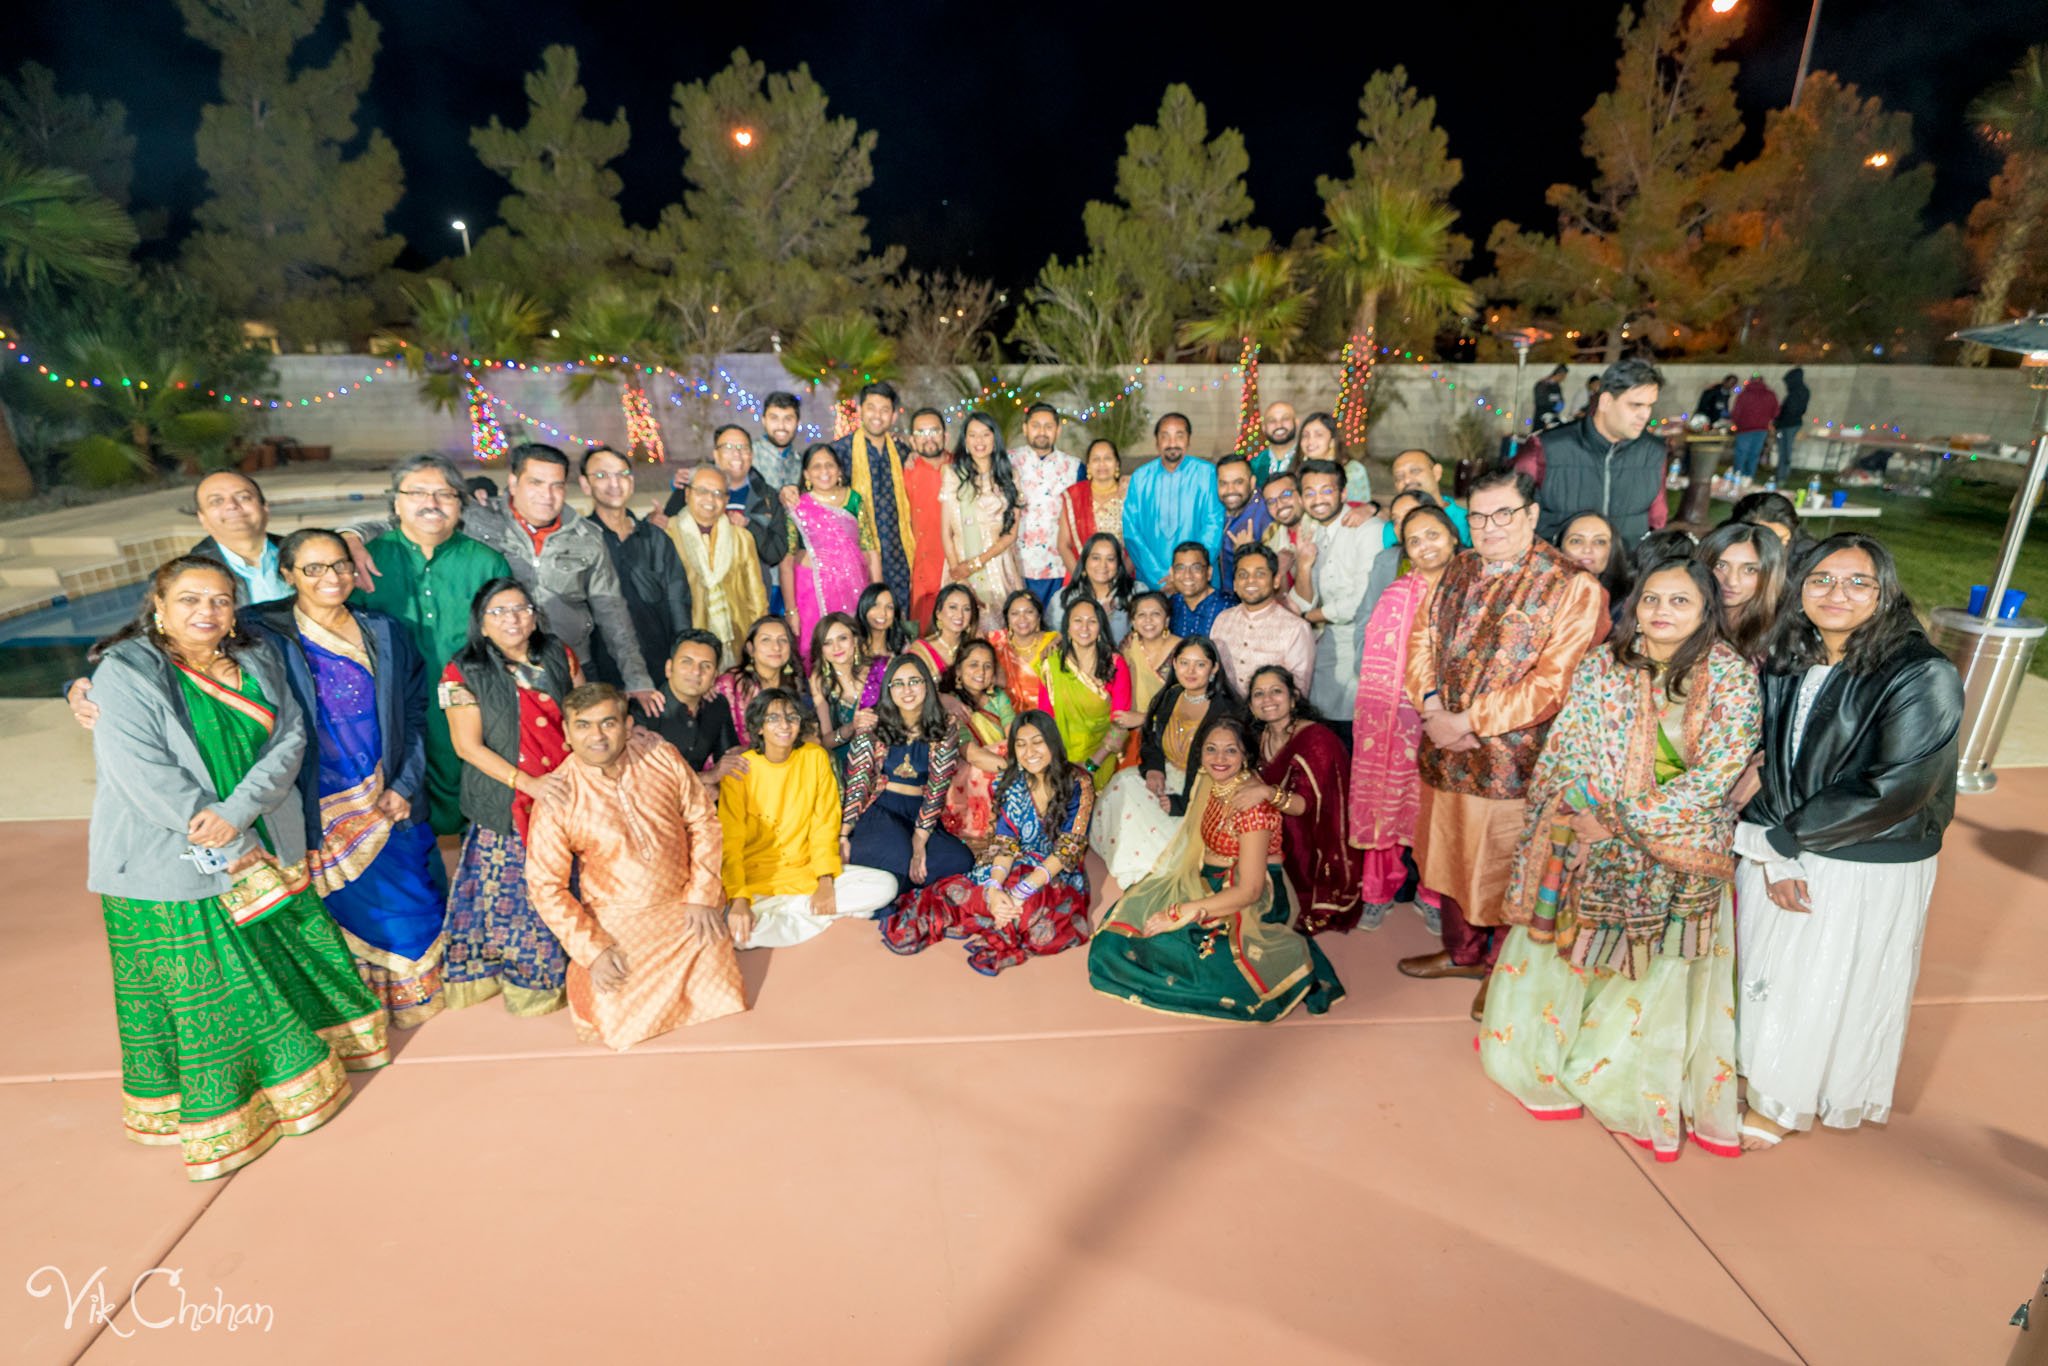 2022-02-04-Hely-&-Parth-Garba-Night-Indian-Wedding-Vik-Chohan-Photography-Photo-Booth-Social-Media-VCP-158.jpg